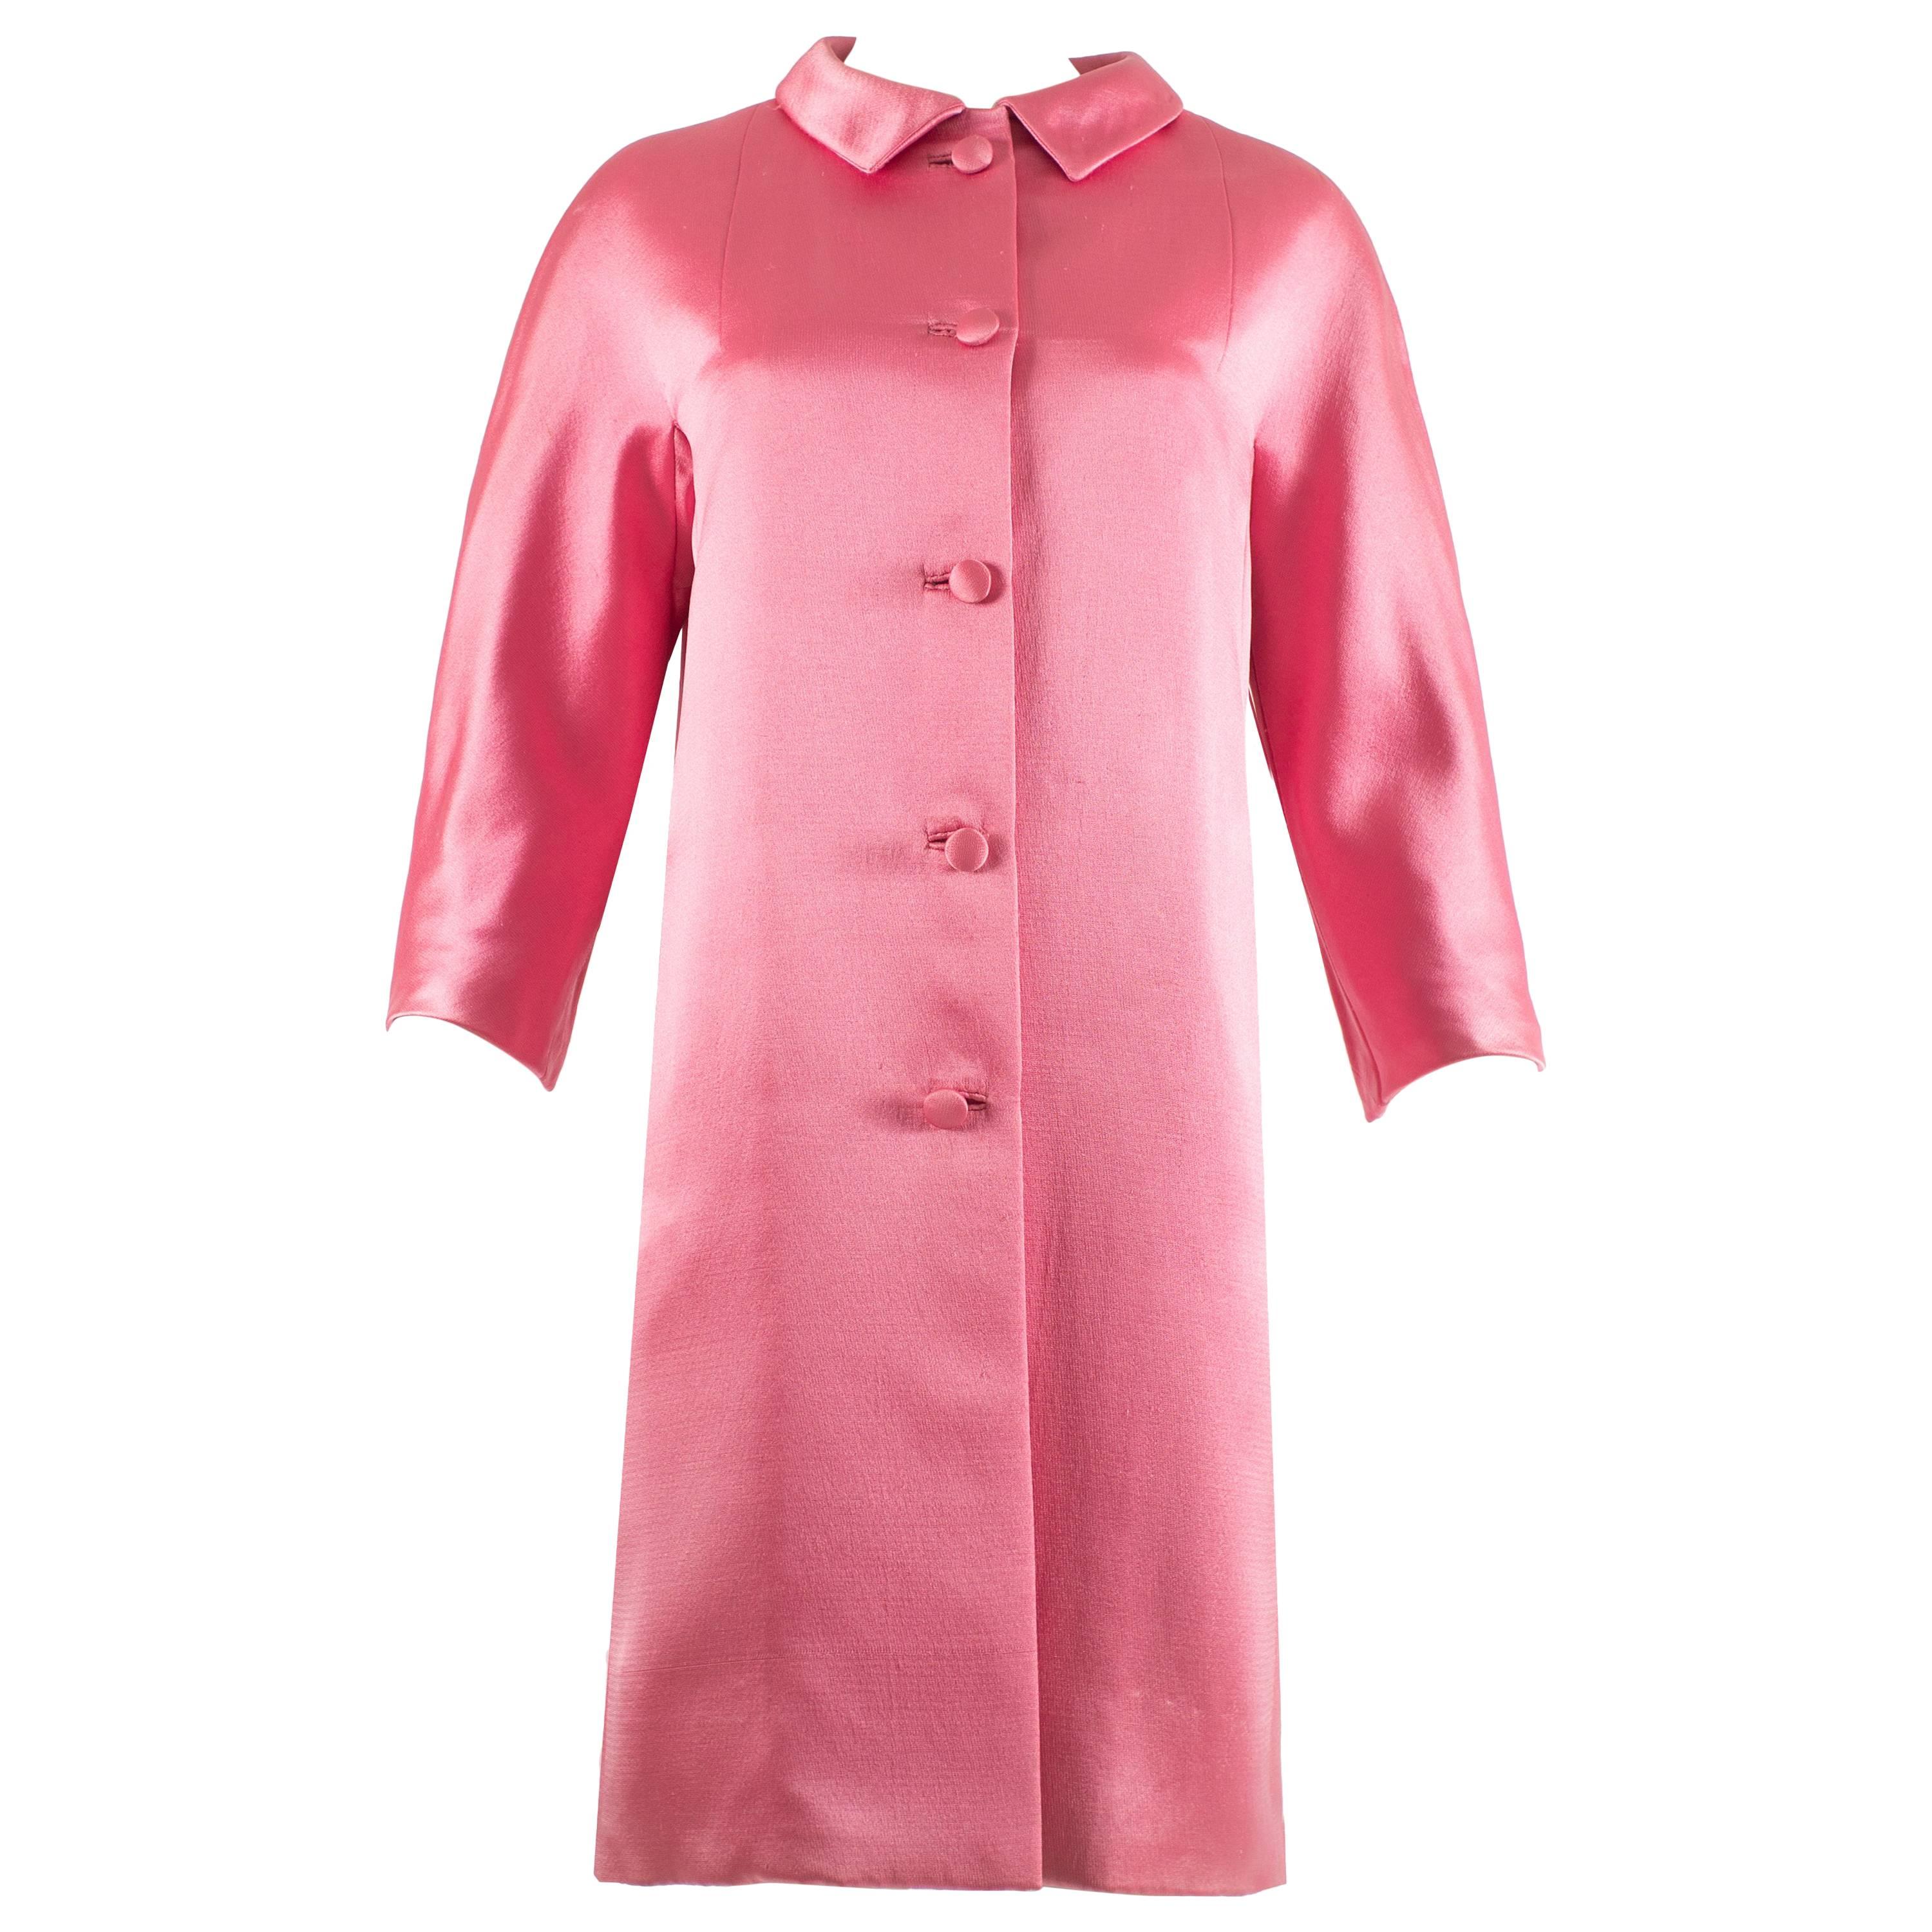 Balenciaga 1963 Haute Couture hot pink silk evening coat